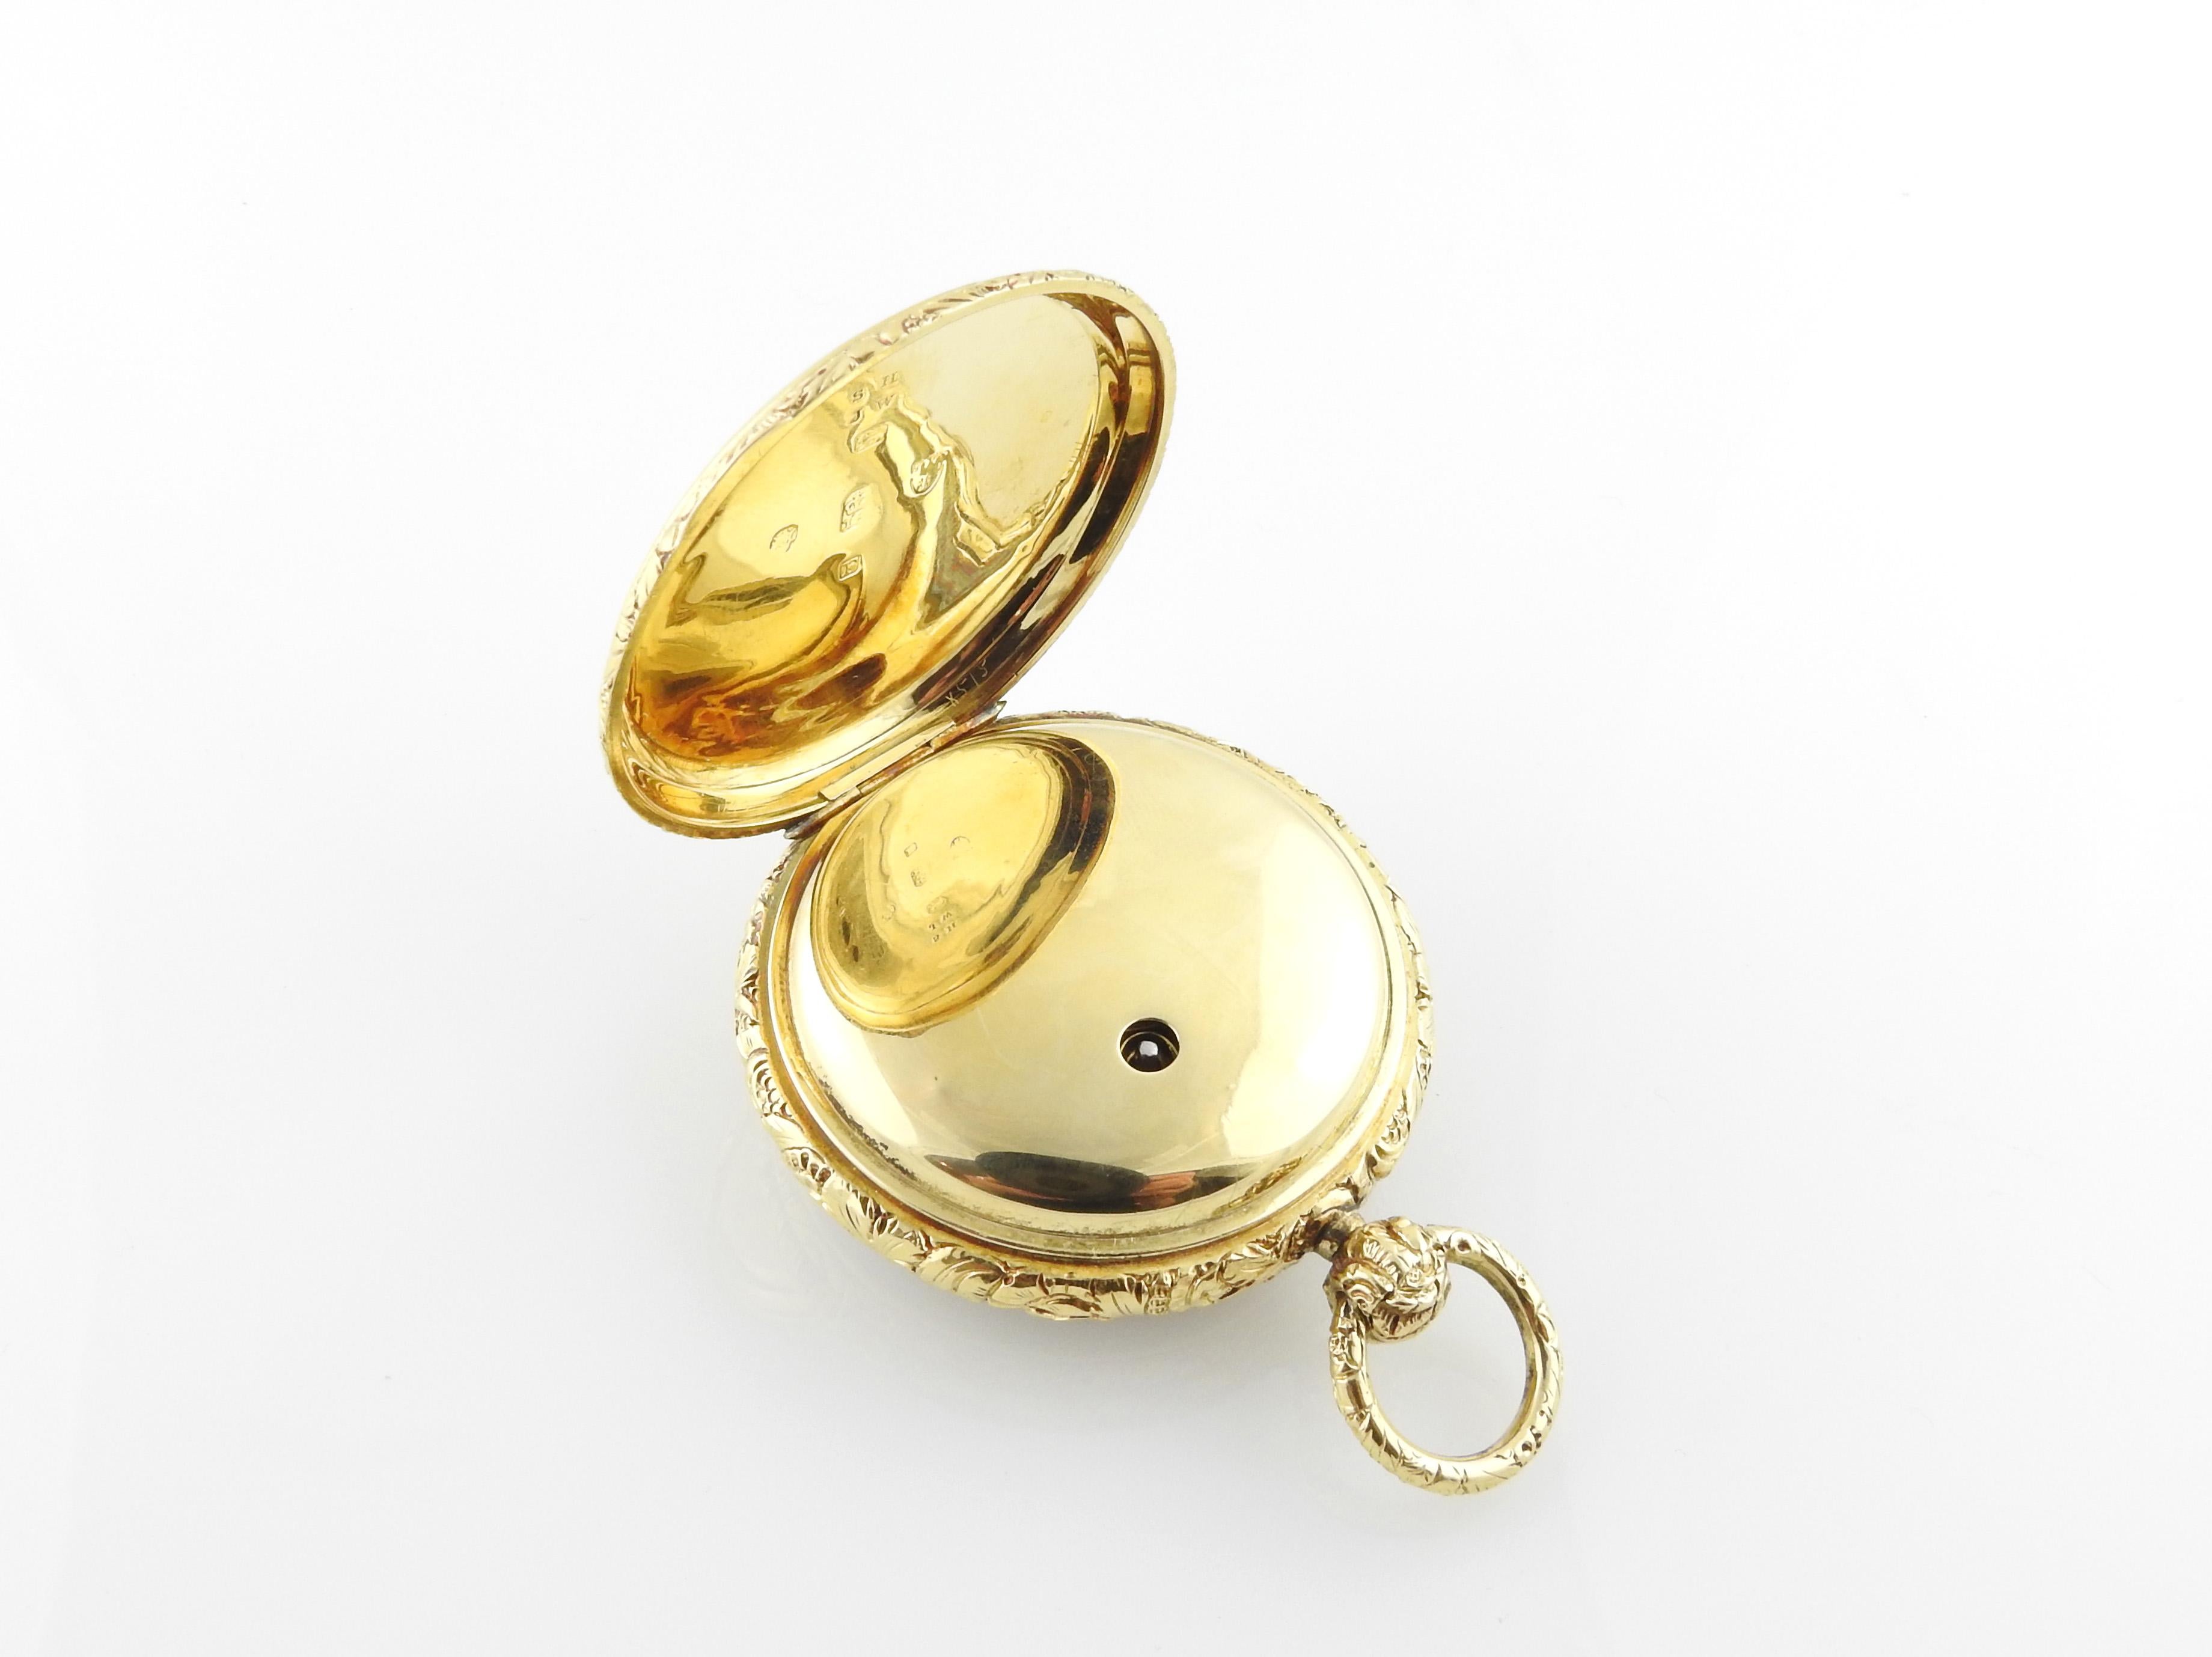 Verge Crown Wheel Key Winding 18K Yellow Gold Ornate Pocket Watch For Sale 3